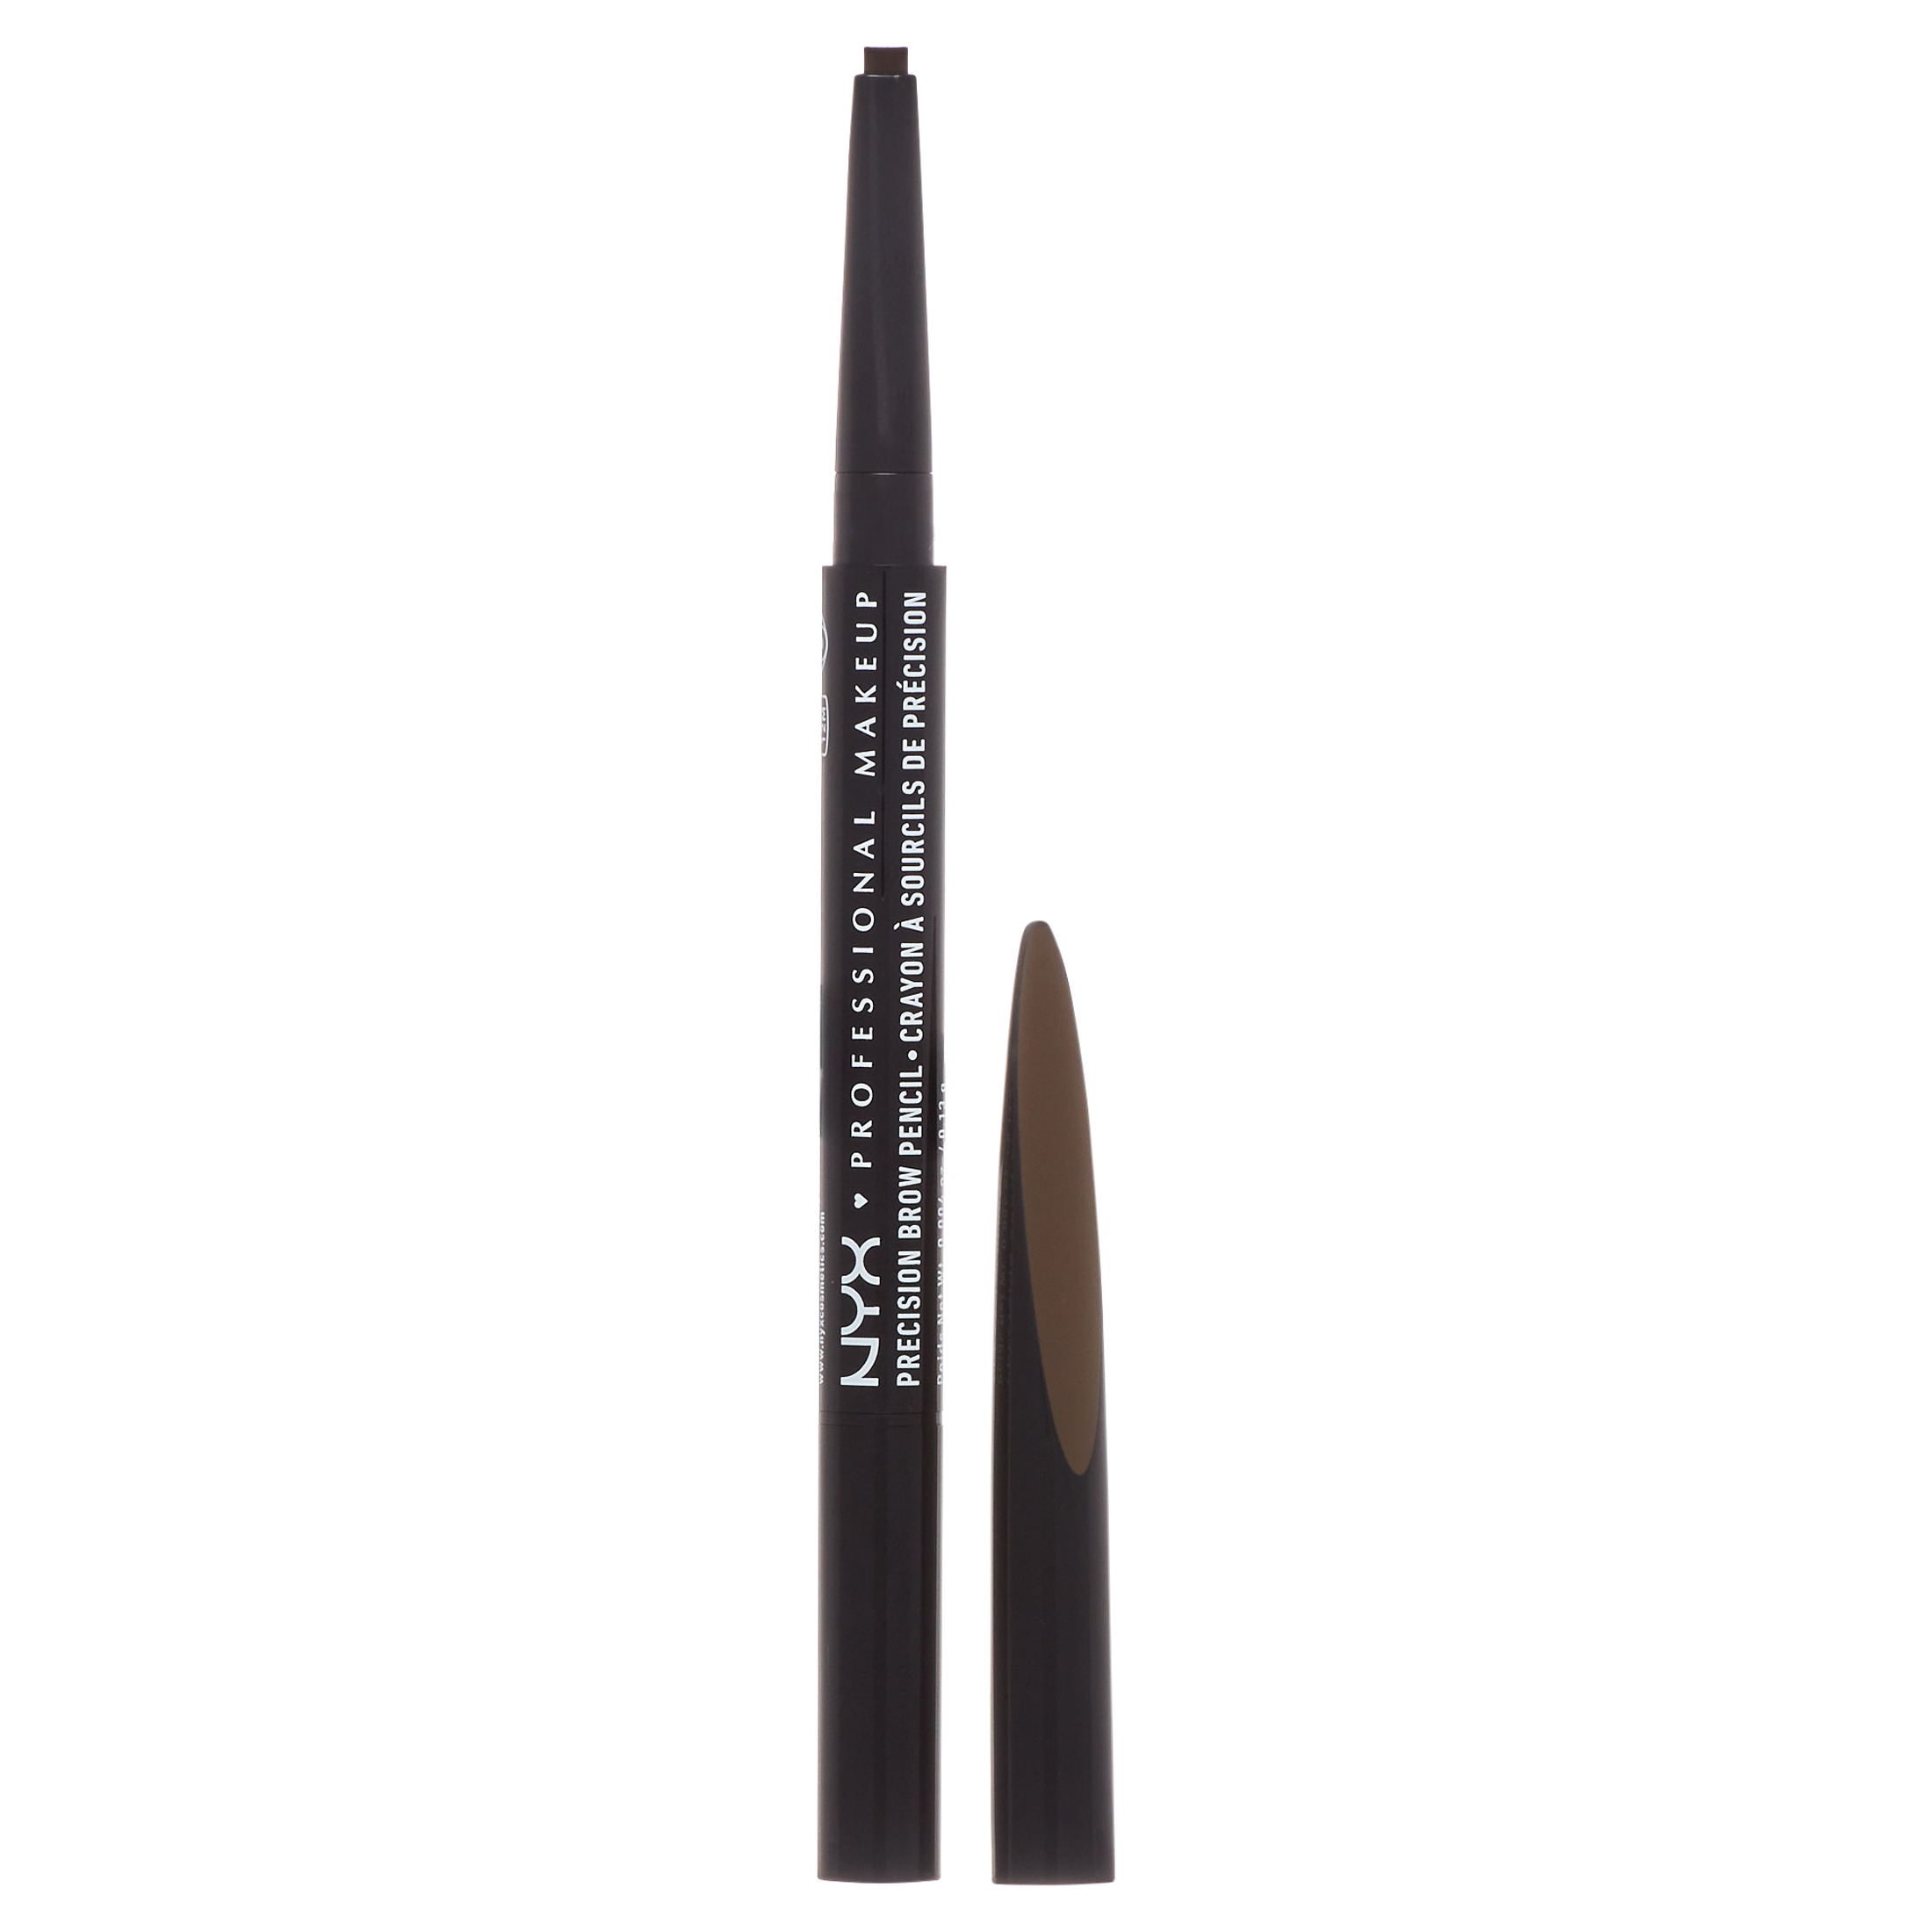 NYX Professional Makeup Precision Eyebrow Pencil, Espresso - image 1 of 12